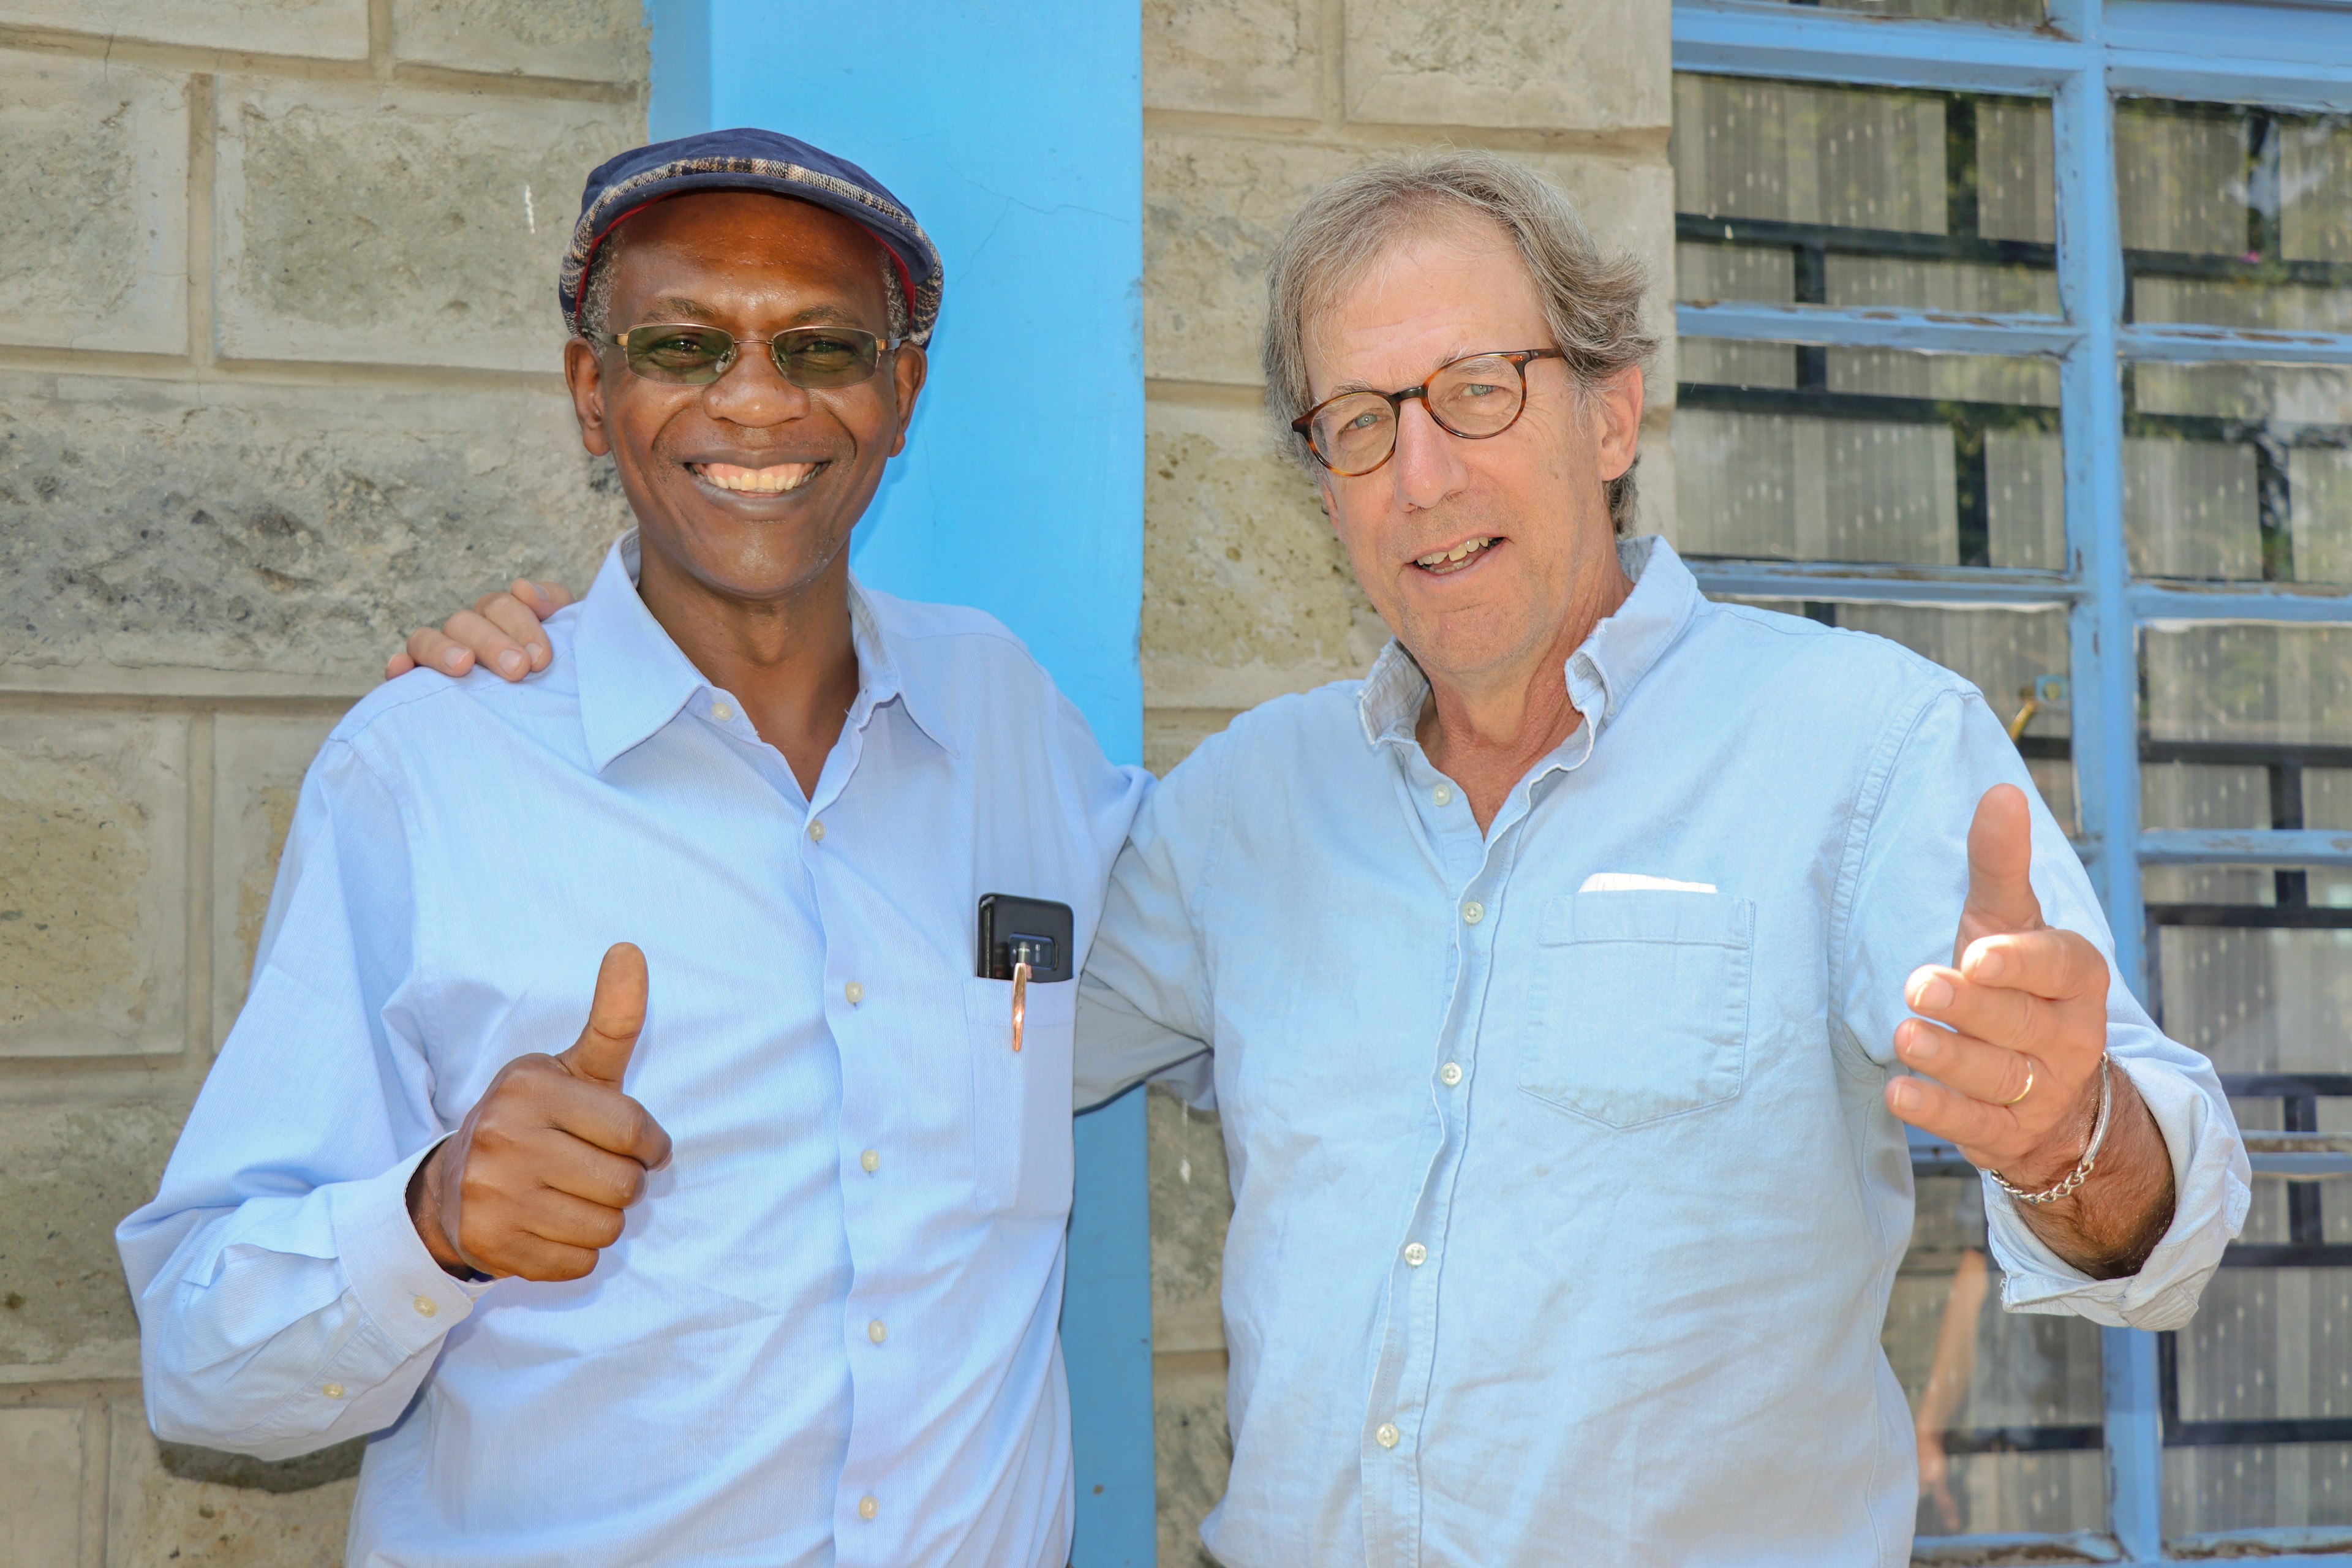 BGSU professors Dr. Kefa Otiso and Dr. George Bullerjahn smile and give thumbs up